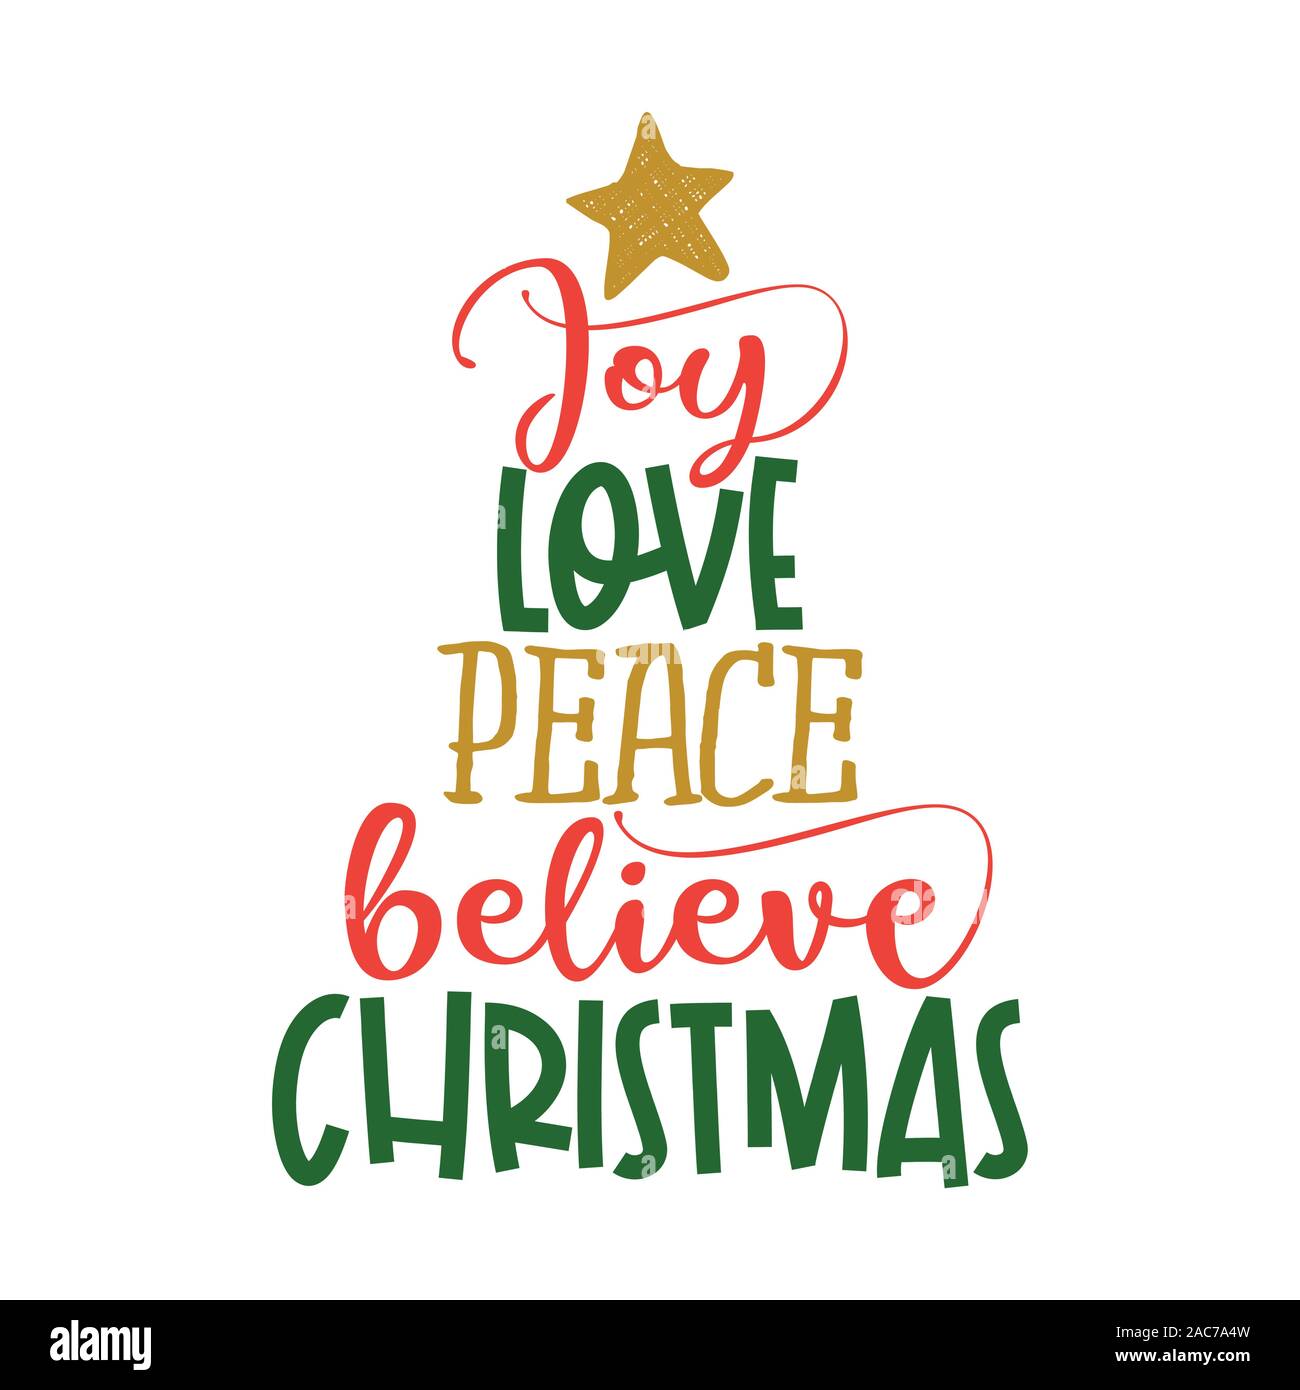 Joy Love Peace Believe Christmas - Calligraphy phrase. Hand drawn ...